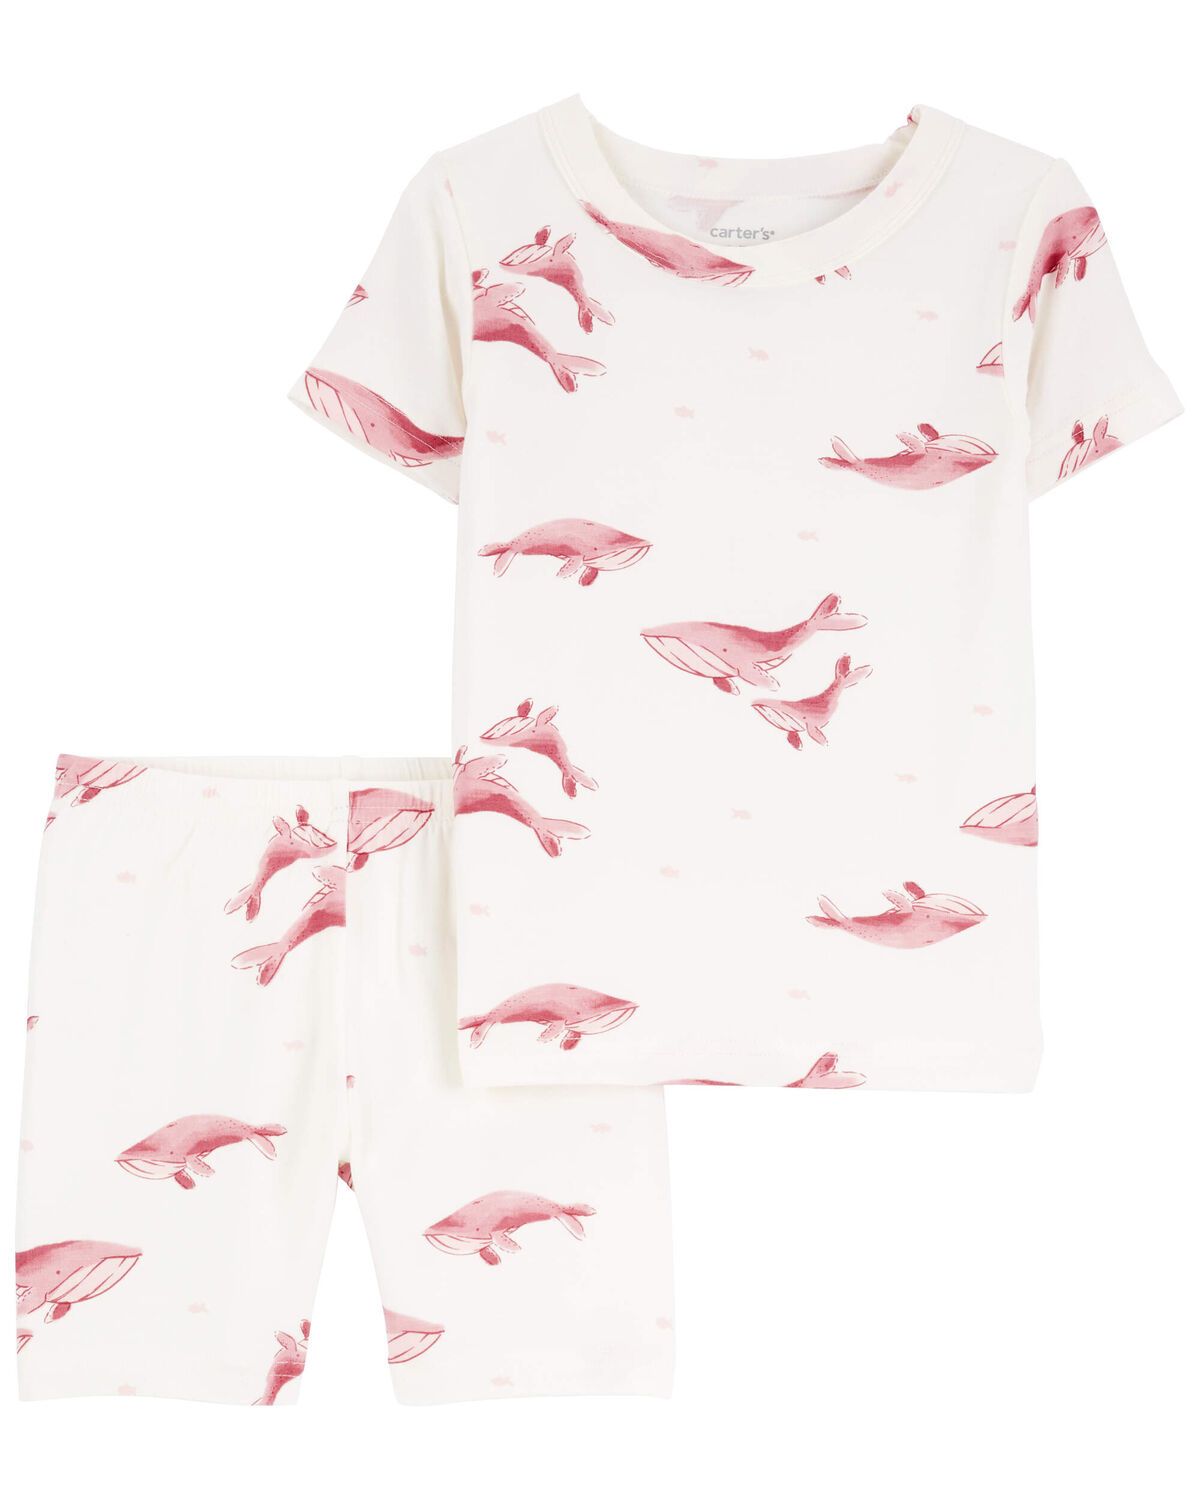 Toddler 2-Piece Whale PurelySoft Pajamas | Carter's